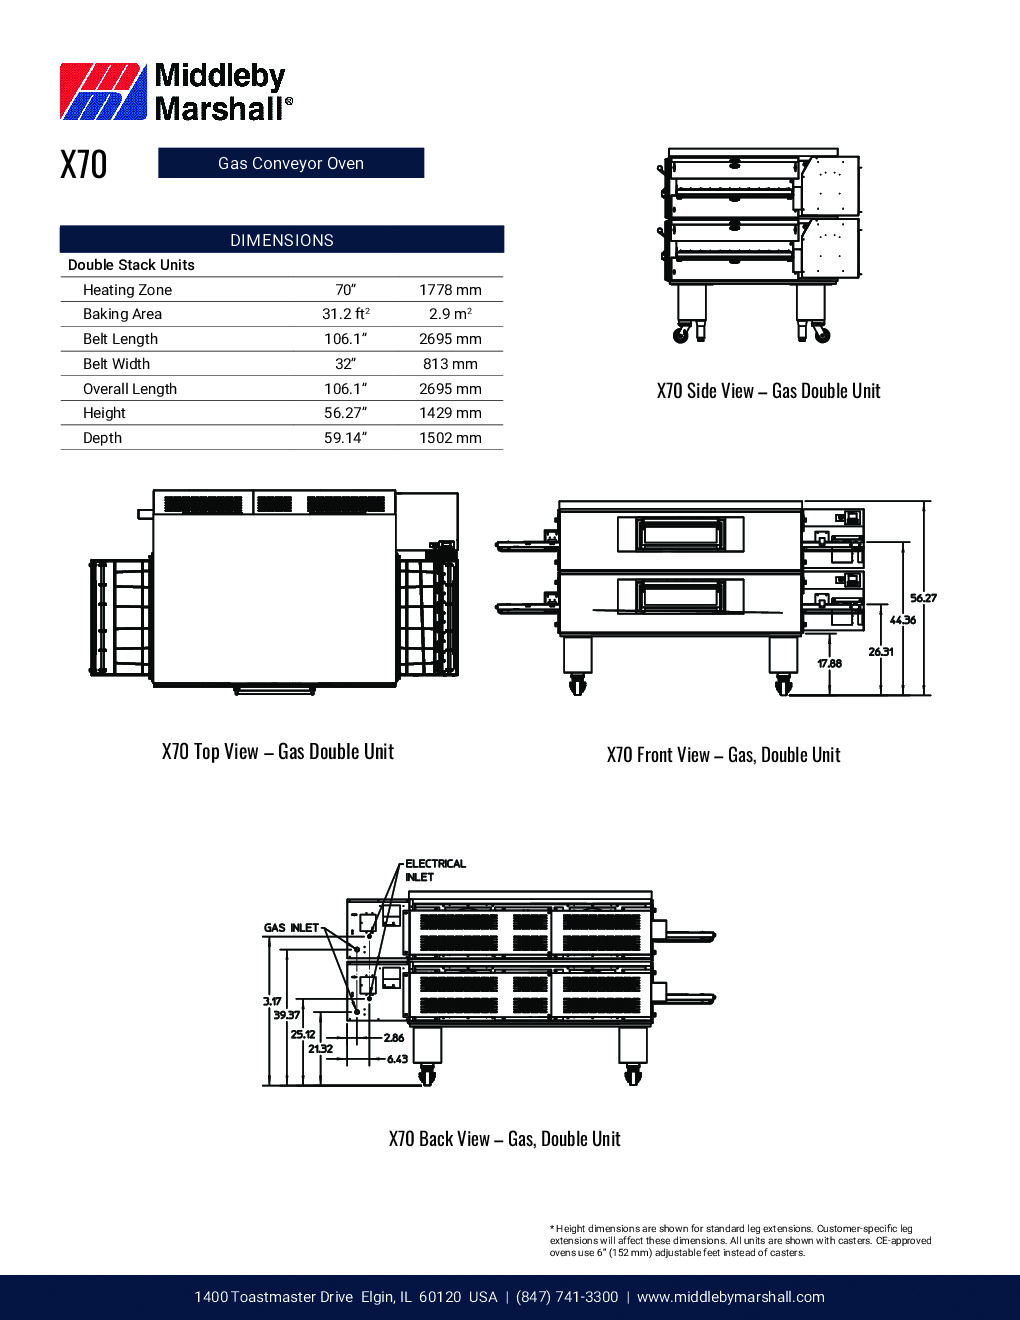 Middleby Marshall X70-2 Conveyor Gas Oven